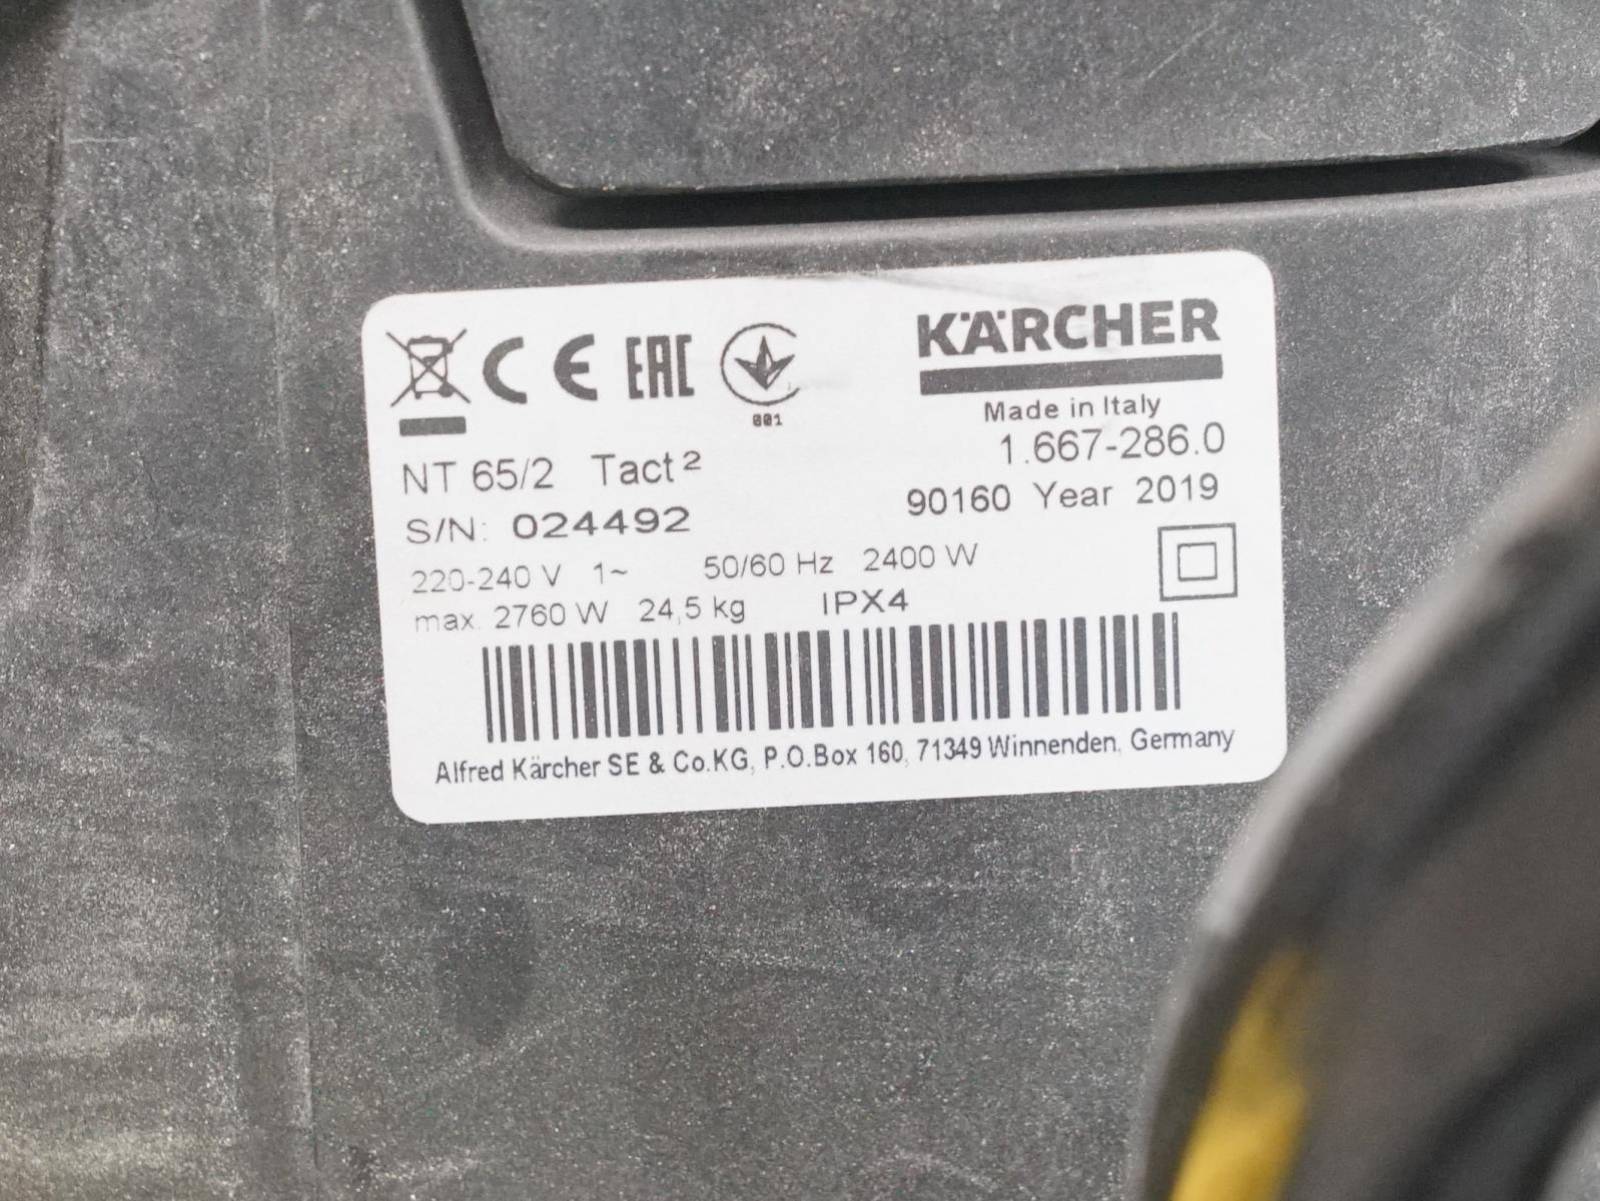 Bolsas para aspiradora NT 65/2 Karcher x 5 und - Karcher